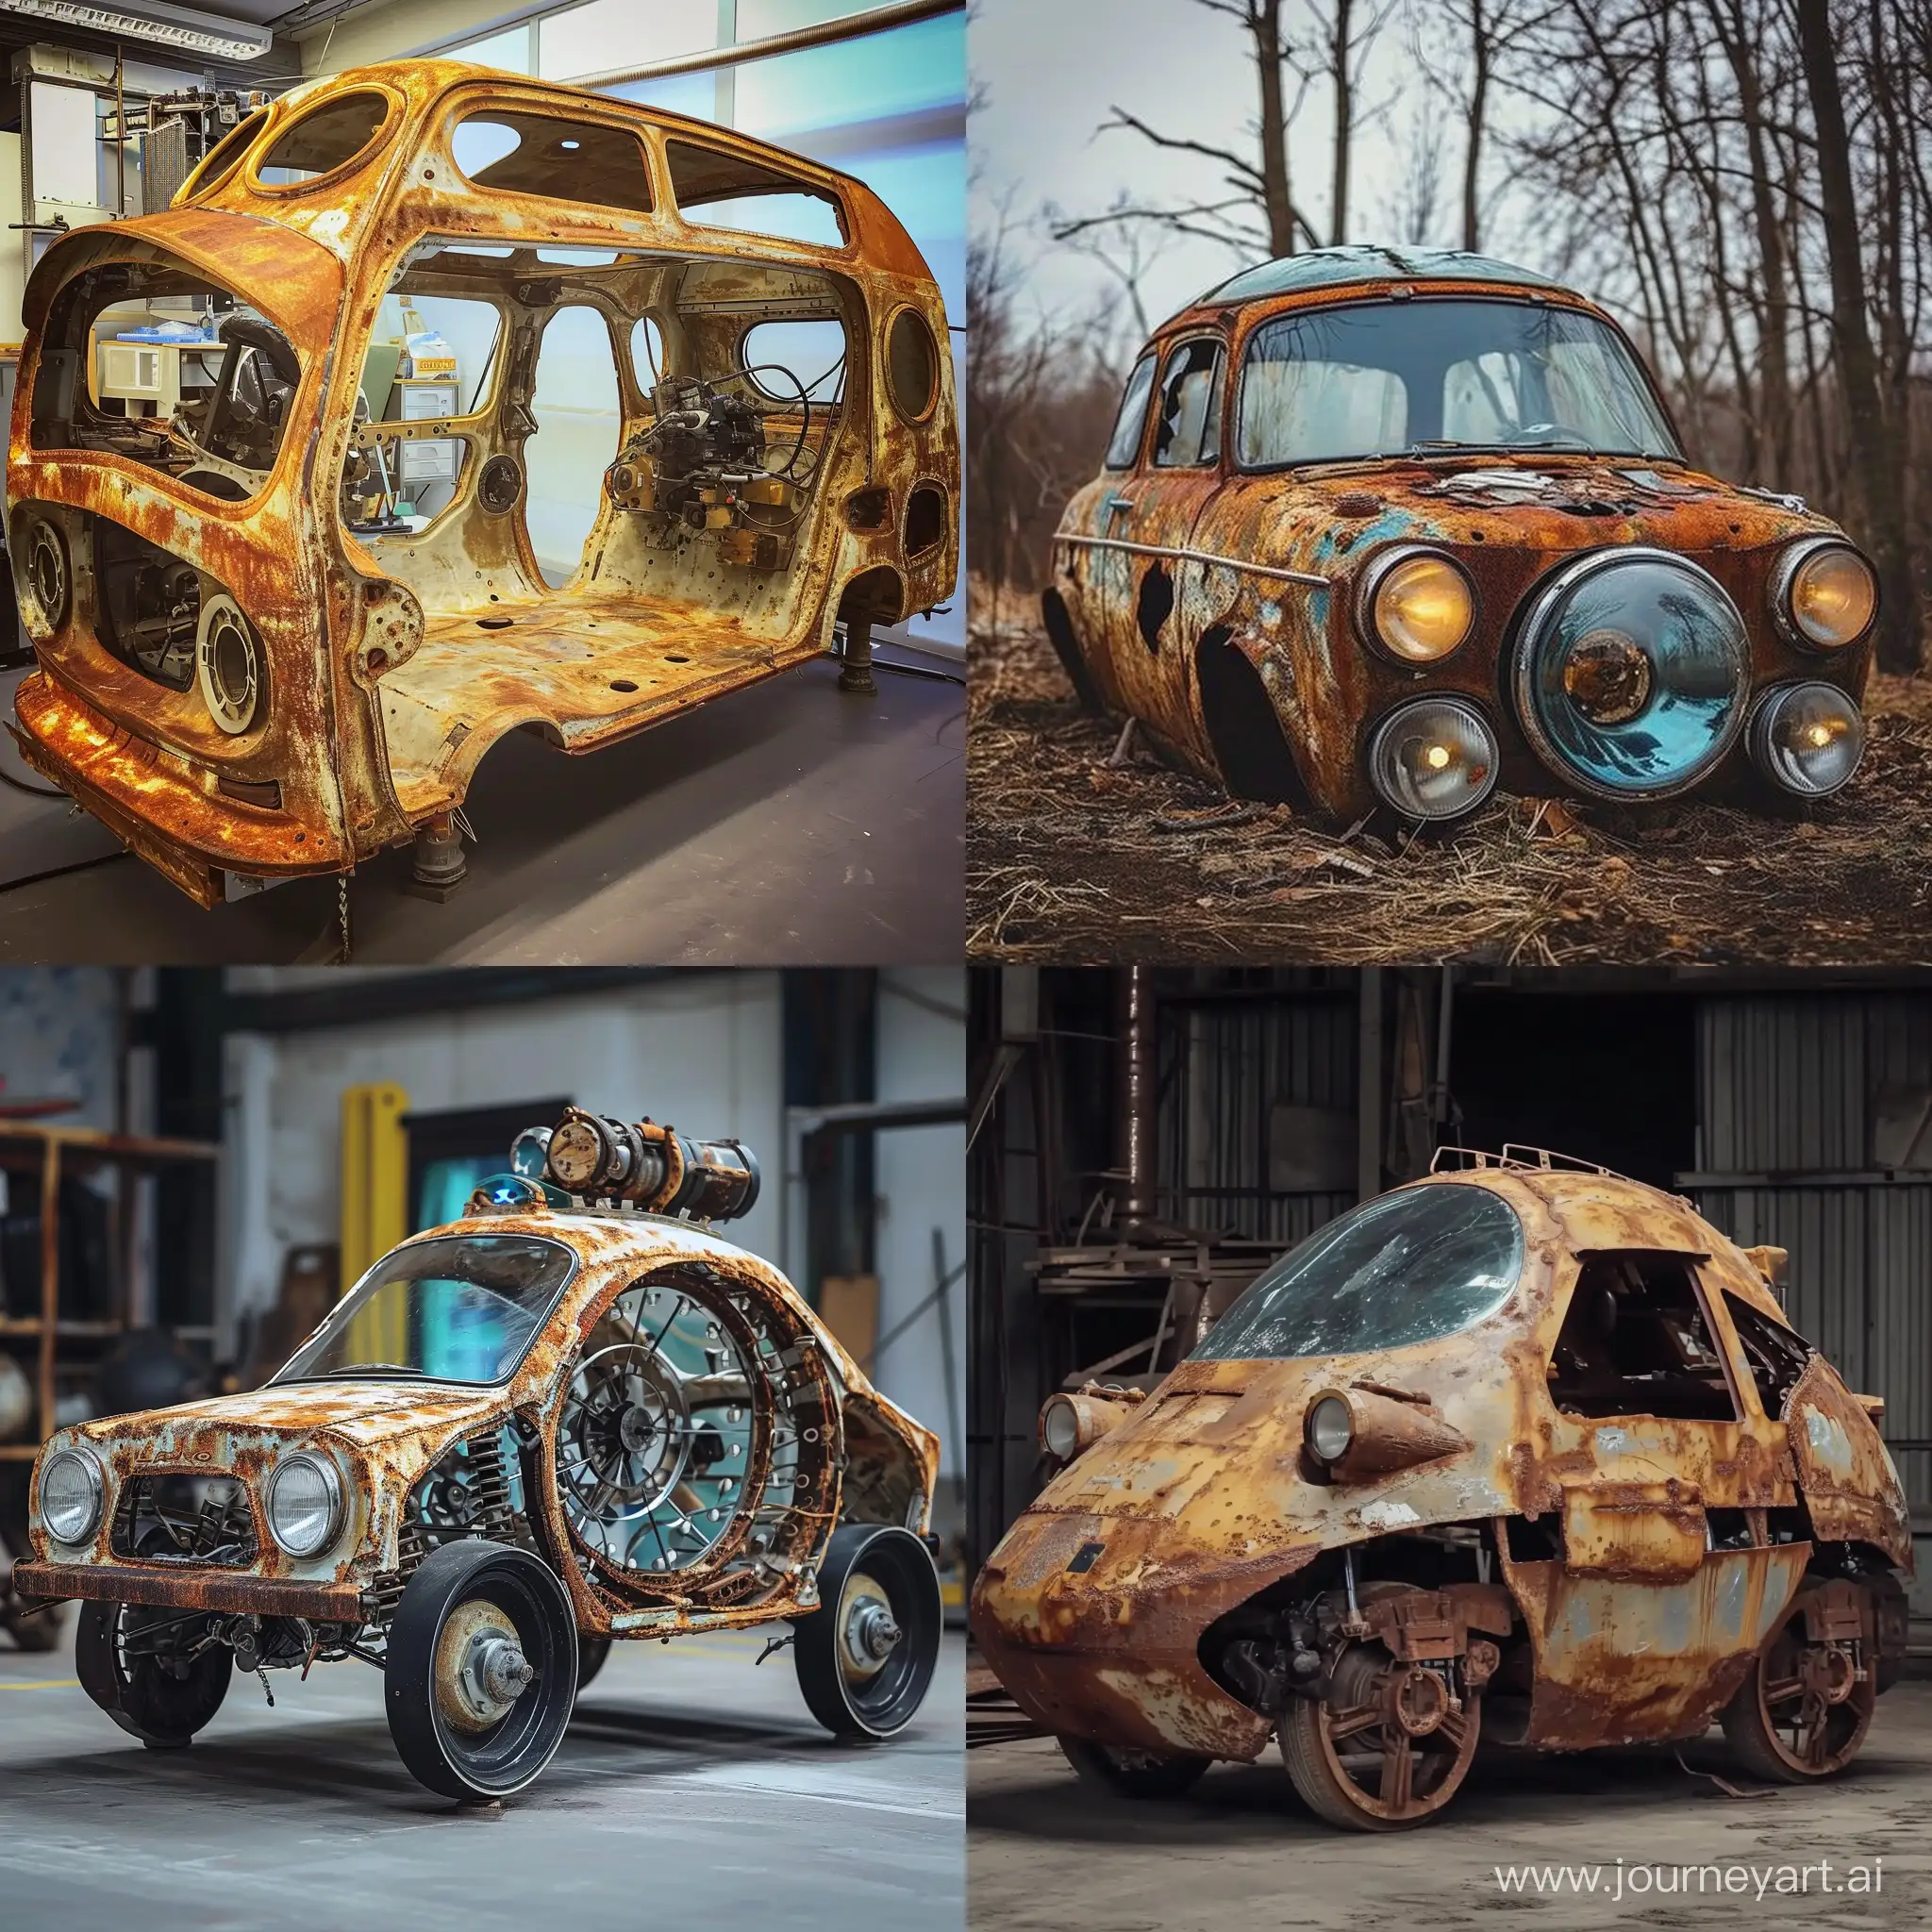 Rusty-Lada-Time-Machine-Art-with-V6-Engine-11-Aspect-Ratio